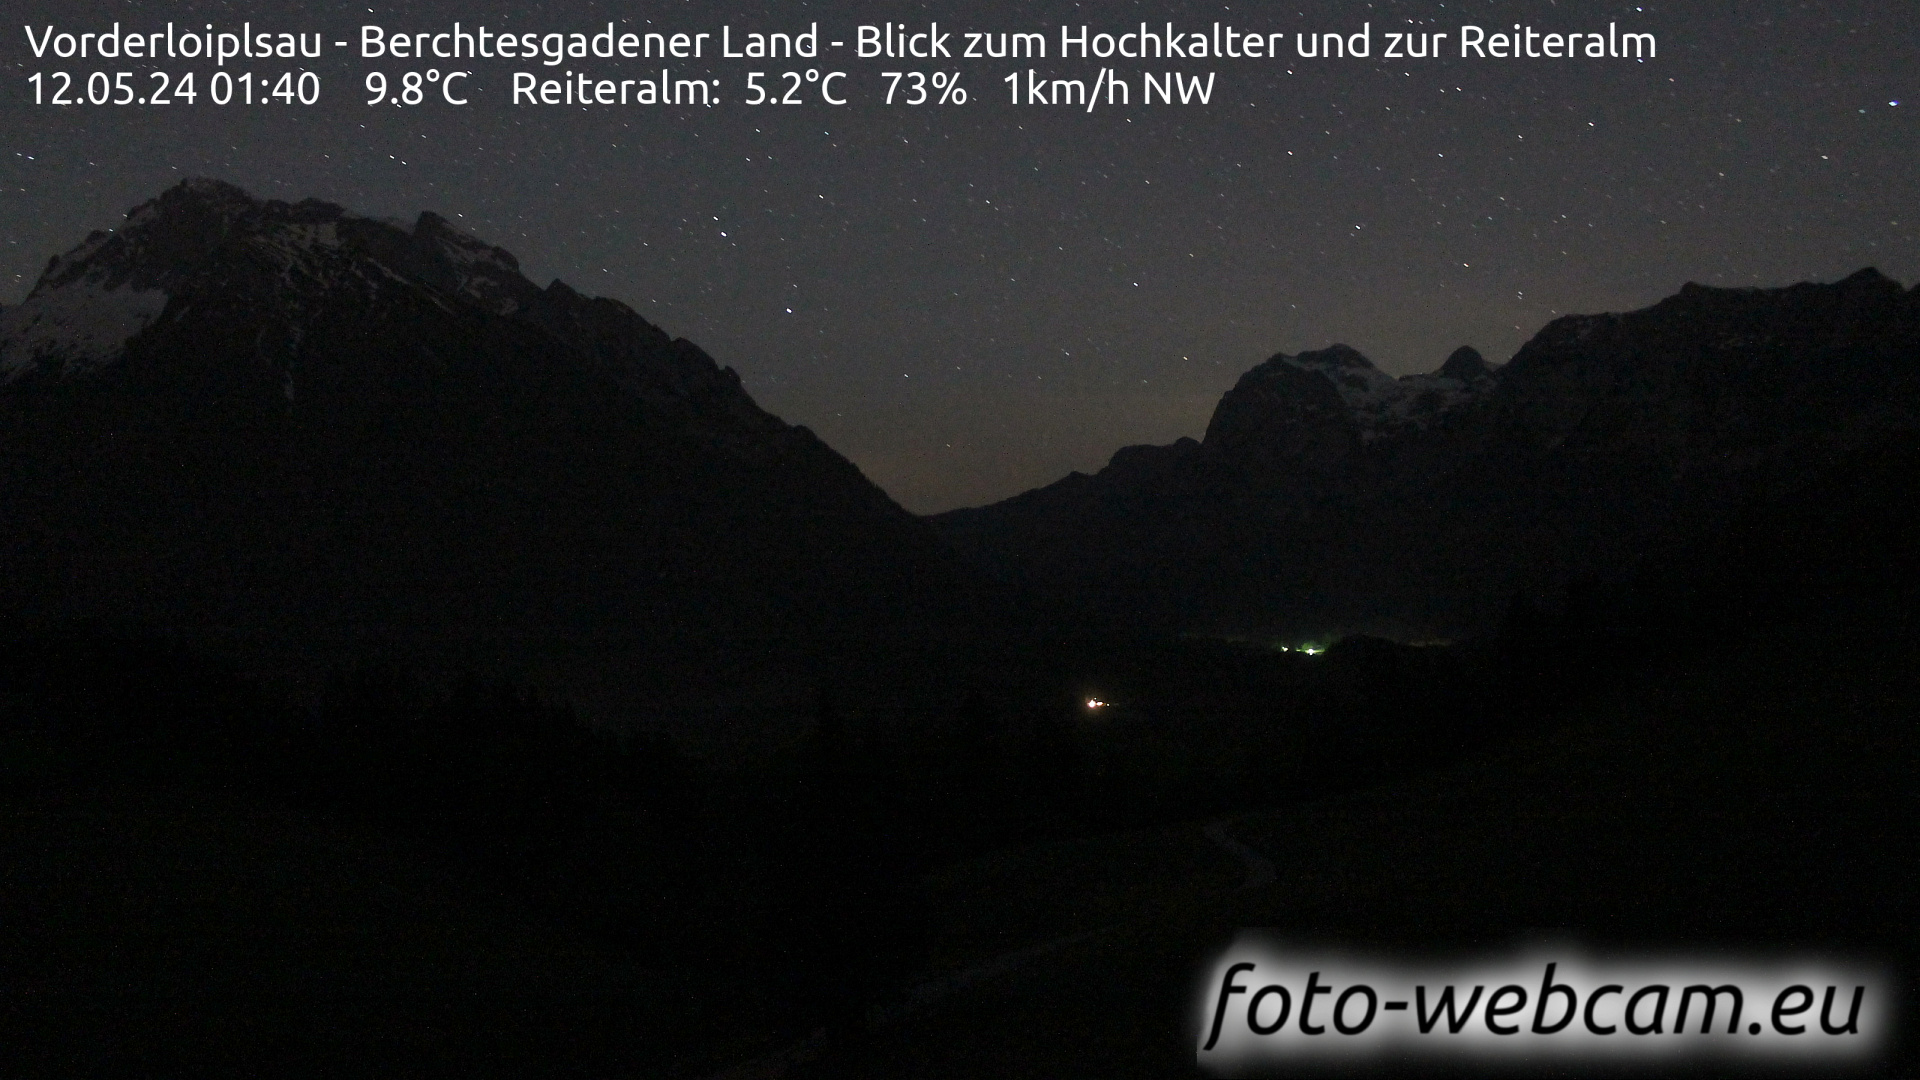 Ramsau bei Berchtesgaden Jue. 01:48